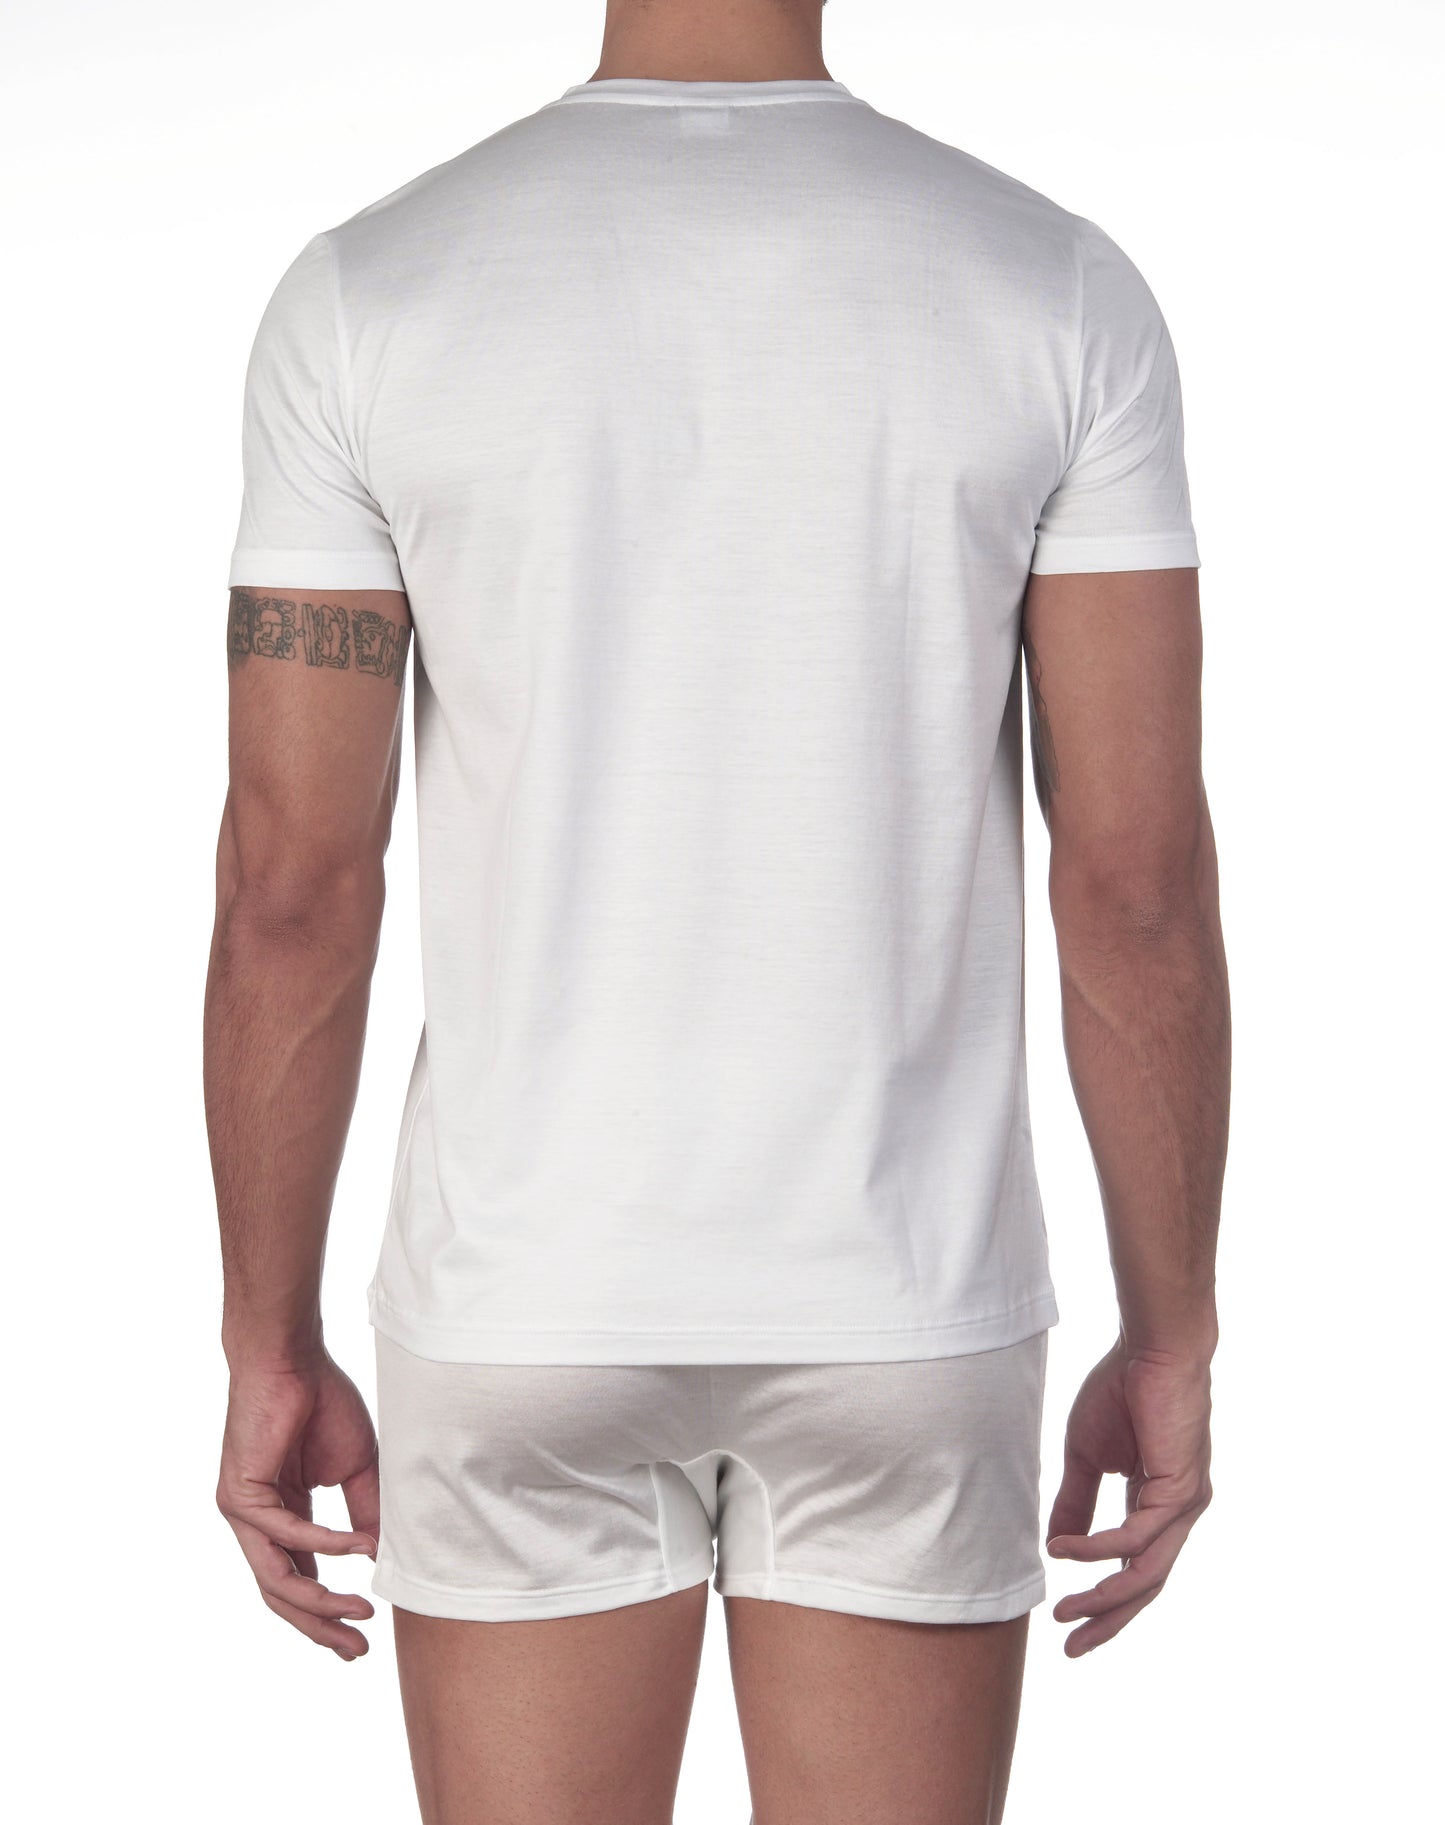 Underwear Top Man in Cotton 2618 - Oscalito